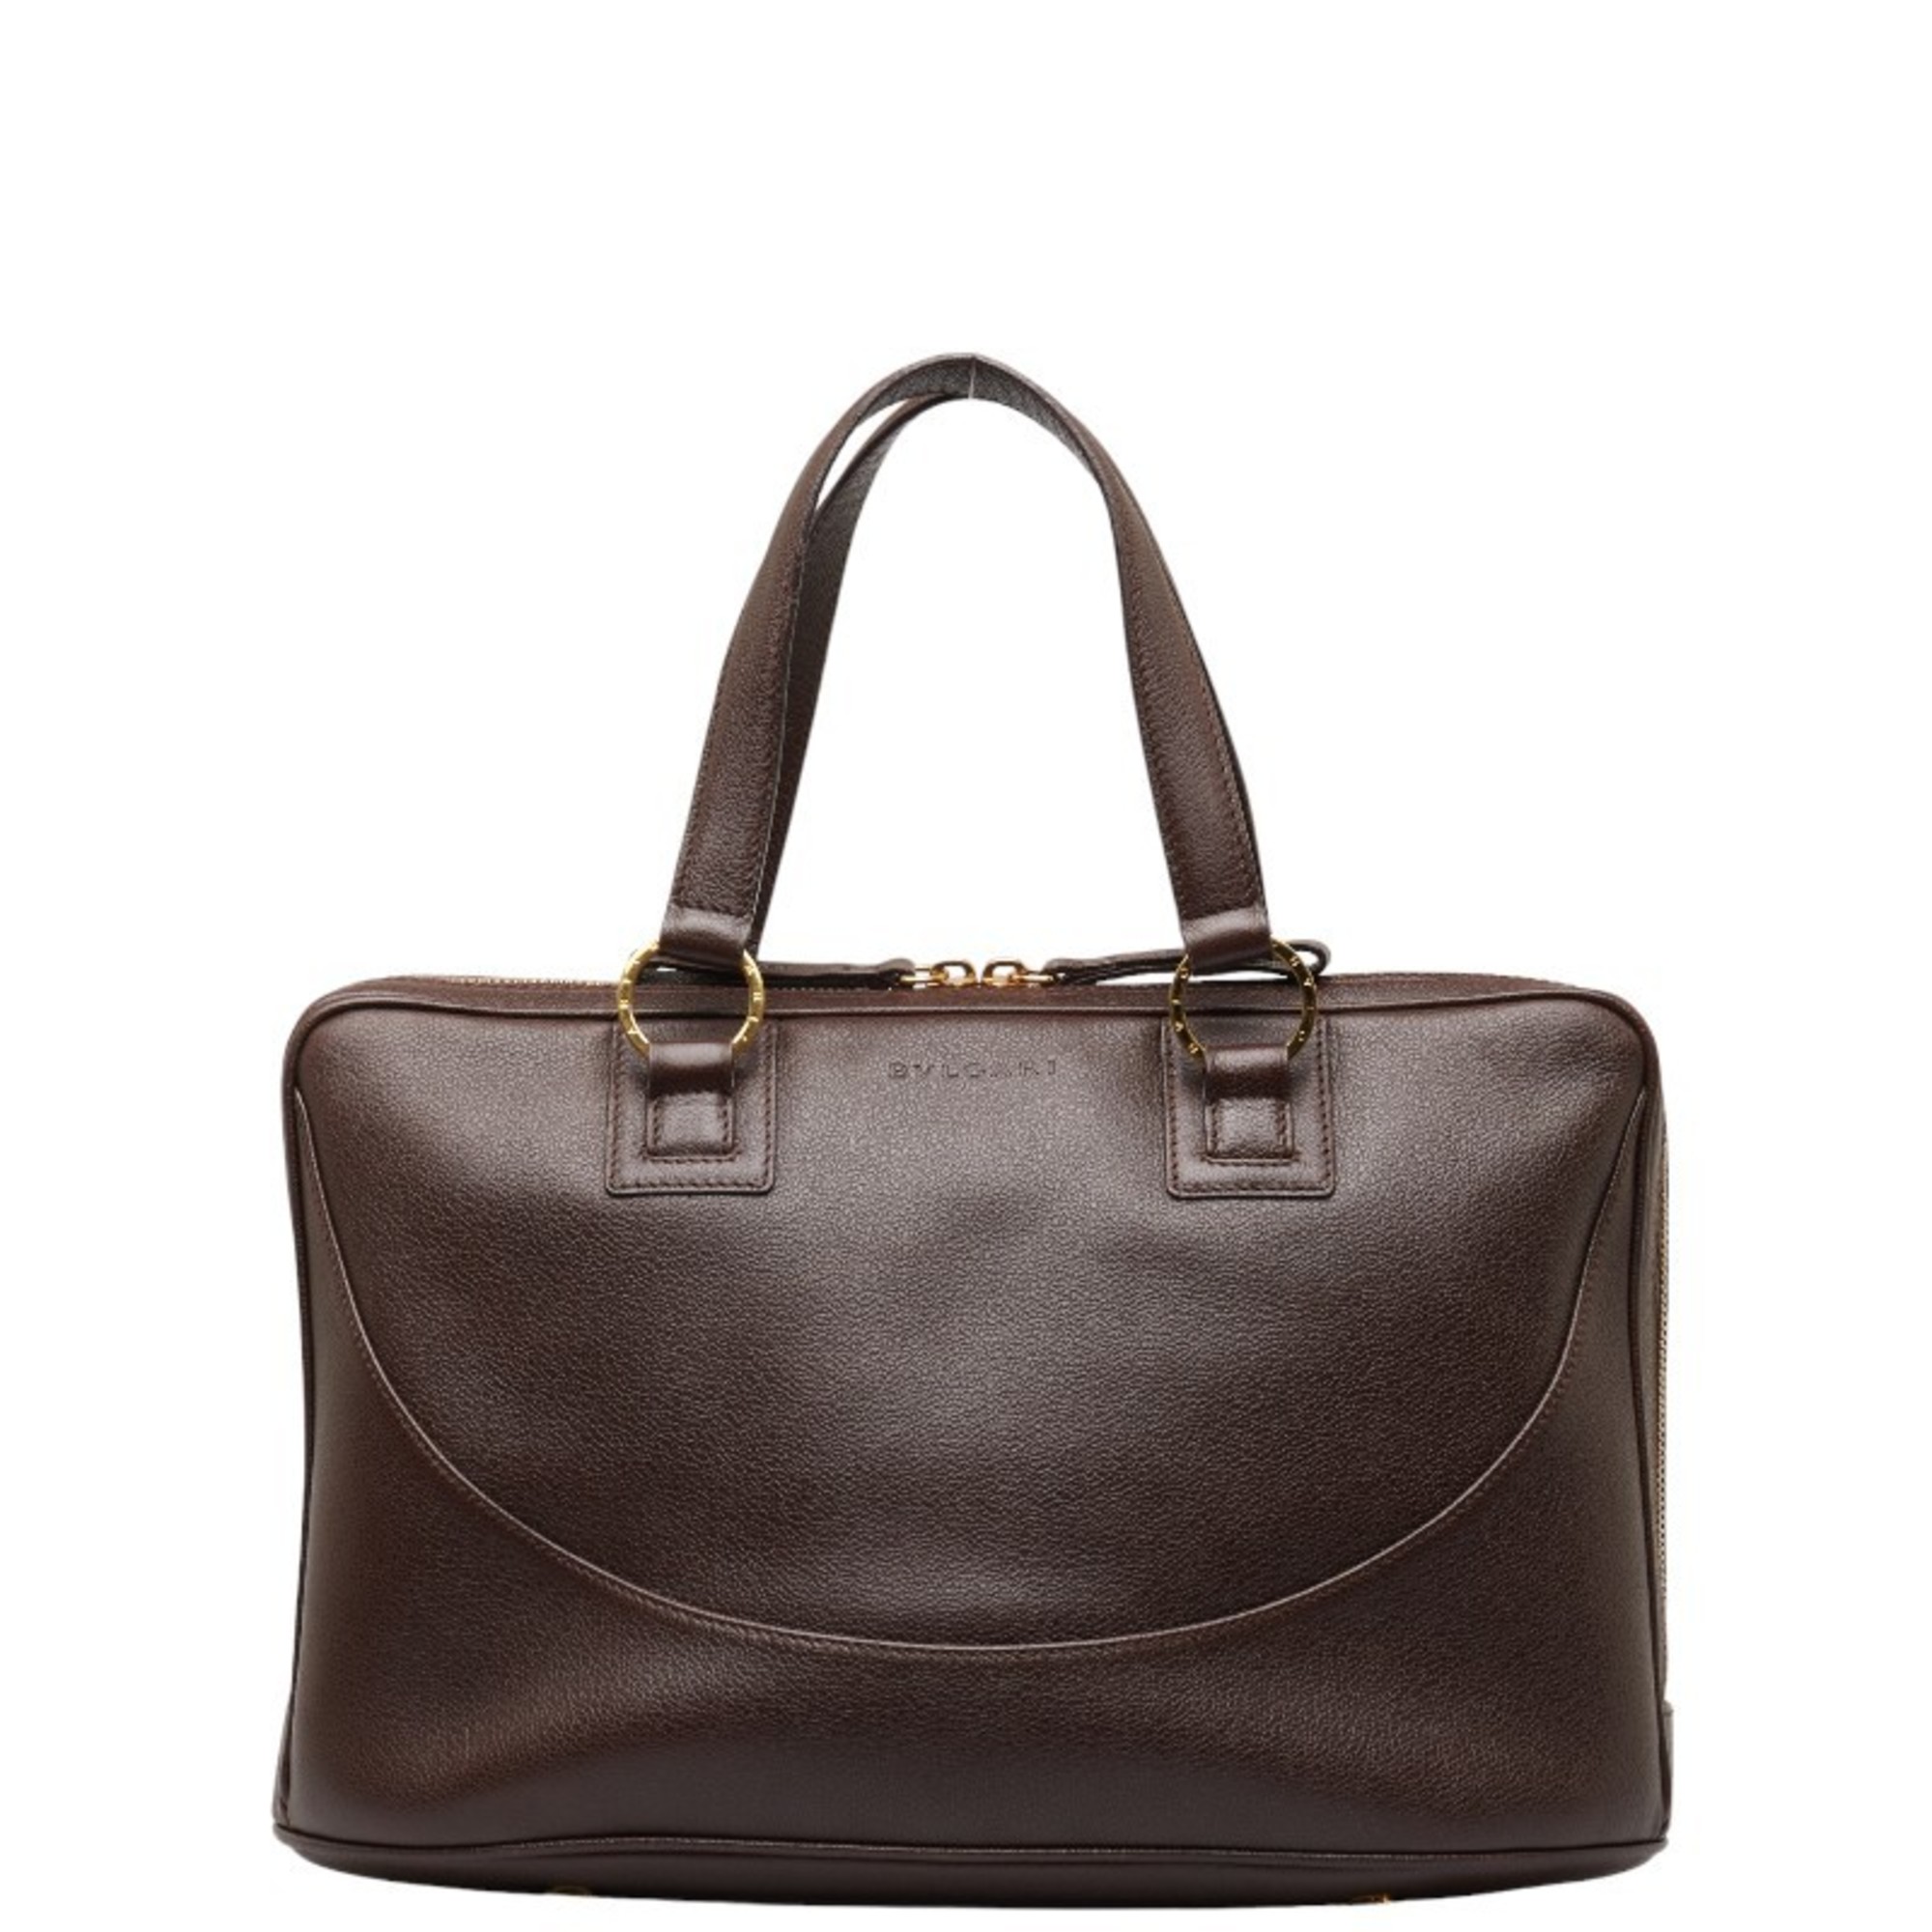 BVLGARI Handbag Tote Bag Brown Gold Leather Women's